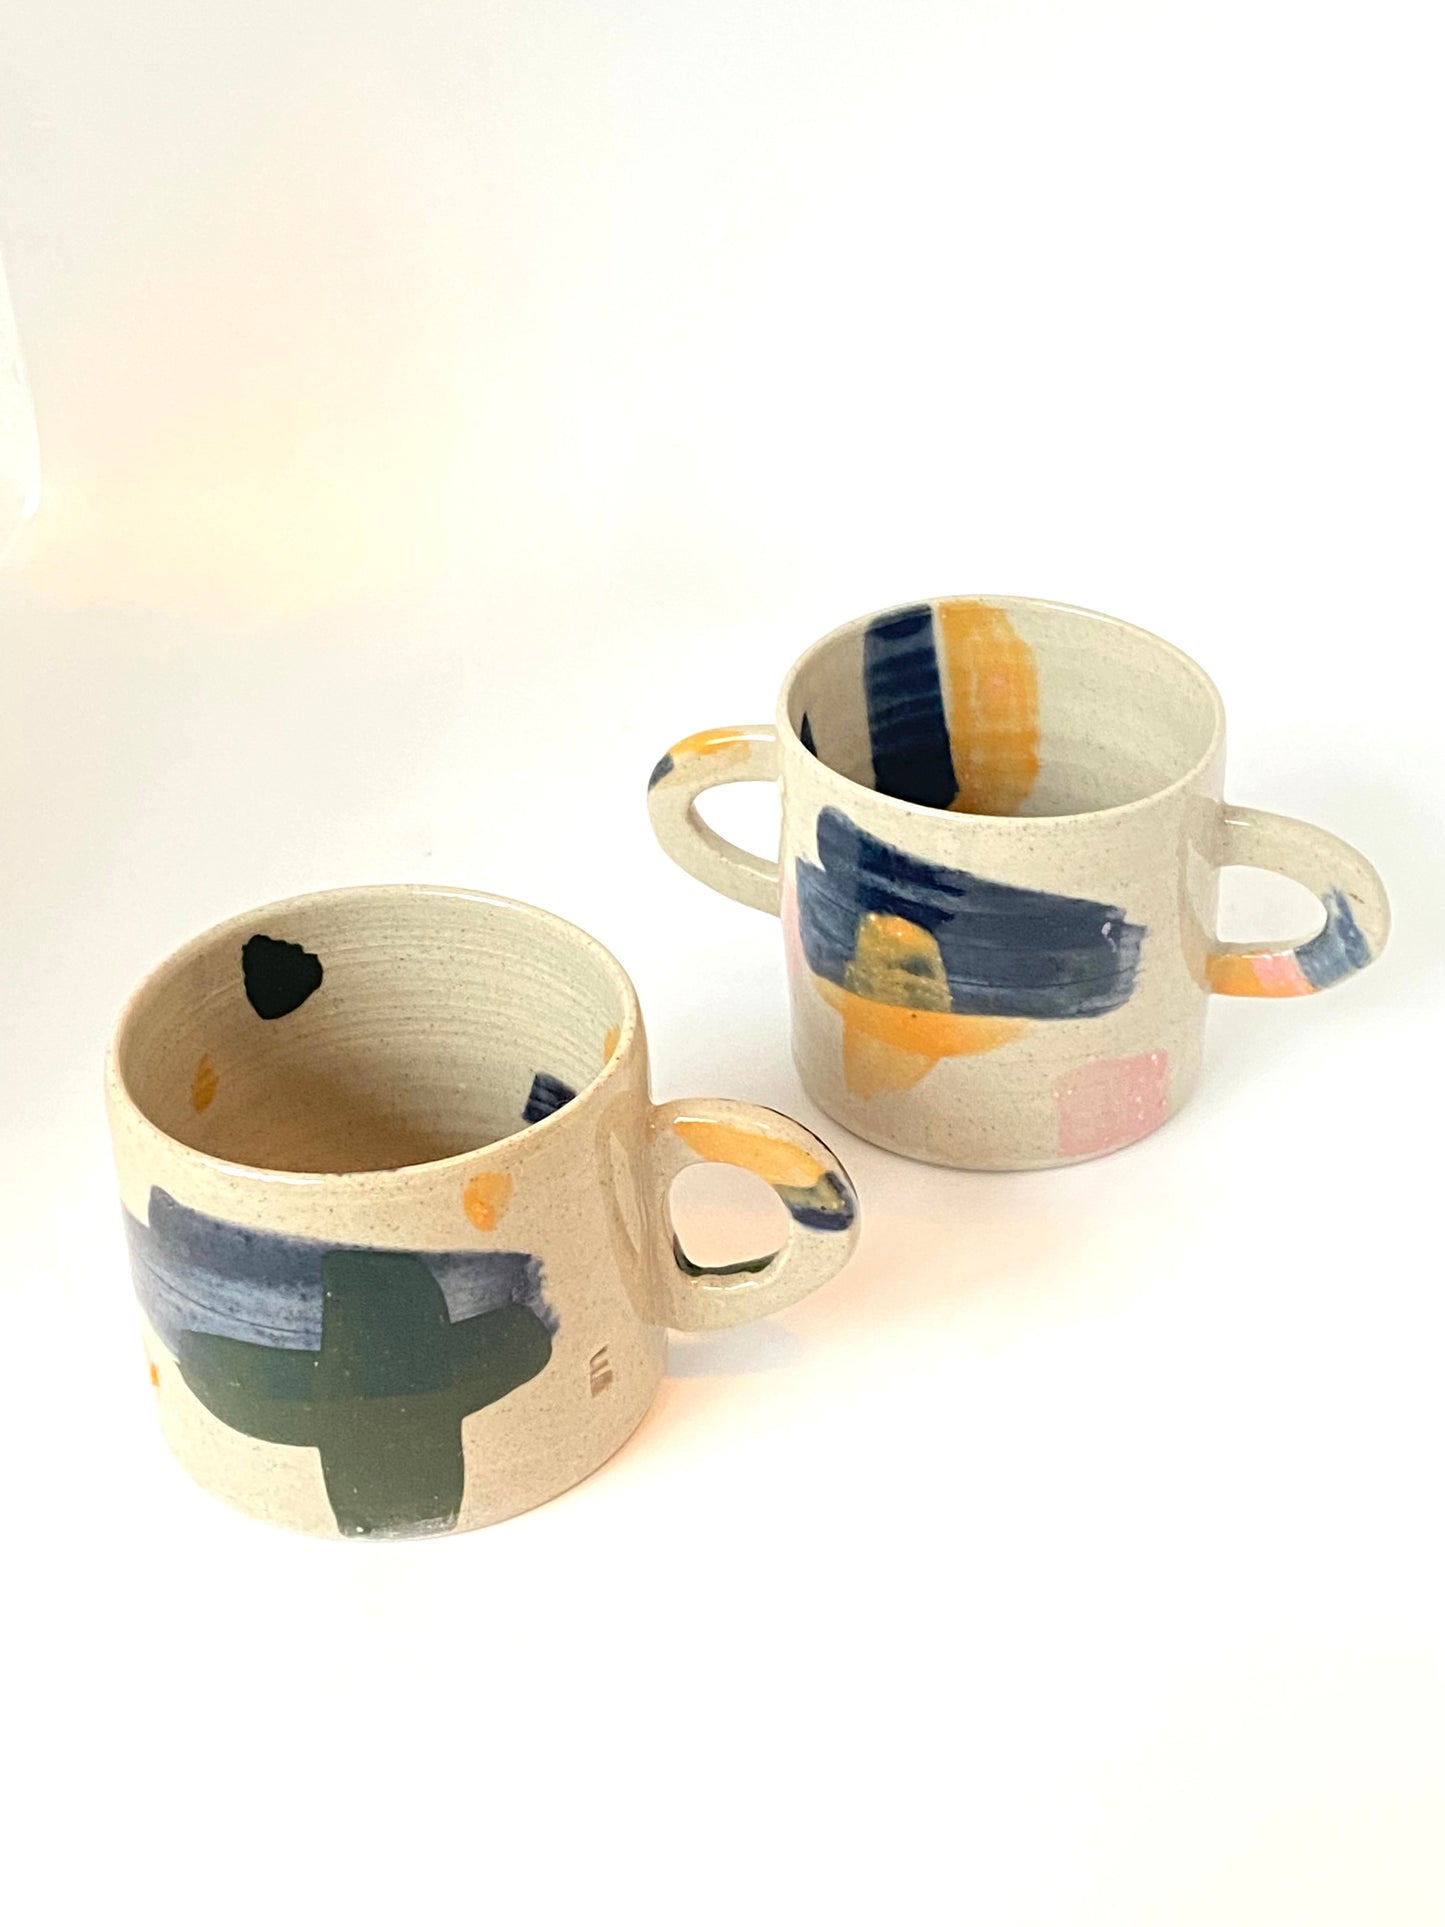 Two-Handled Ceramic Mug - Graphic Series